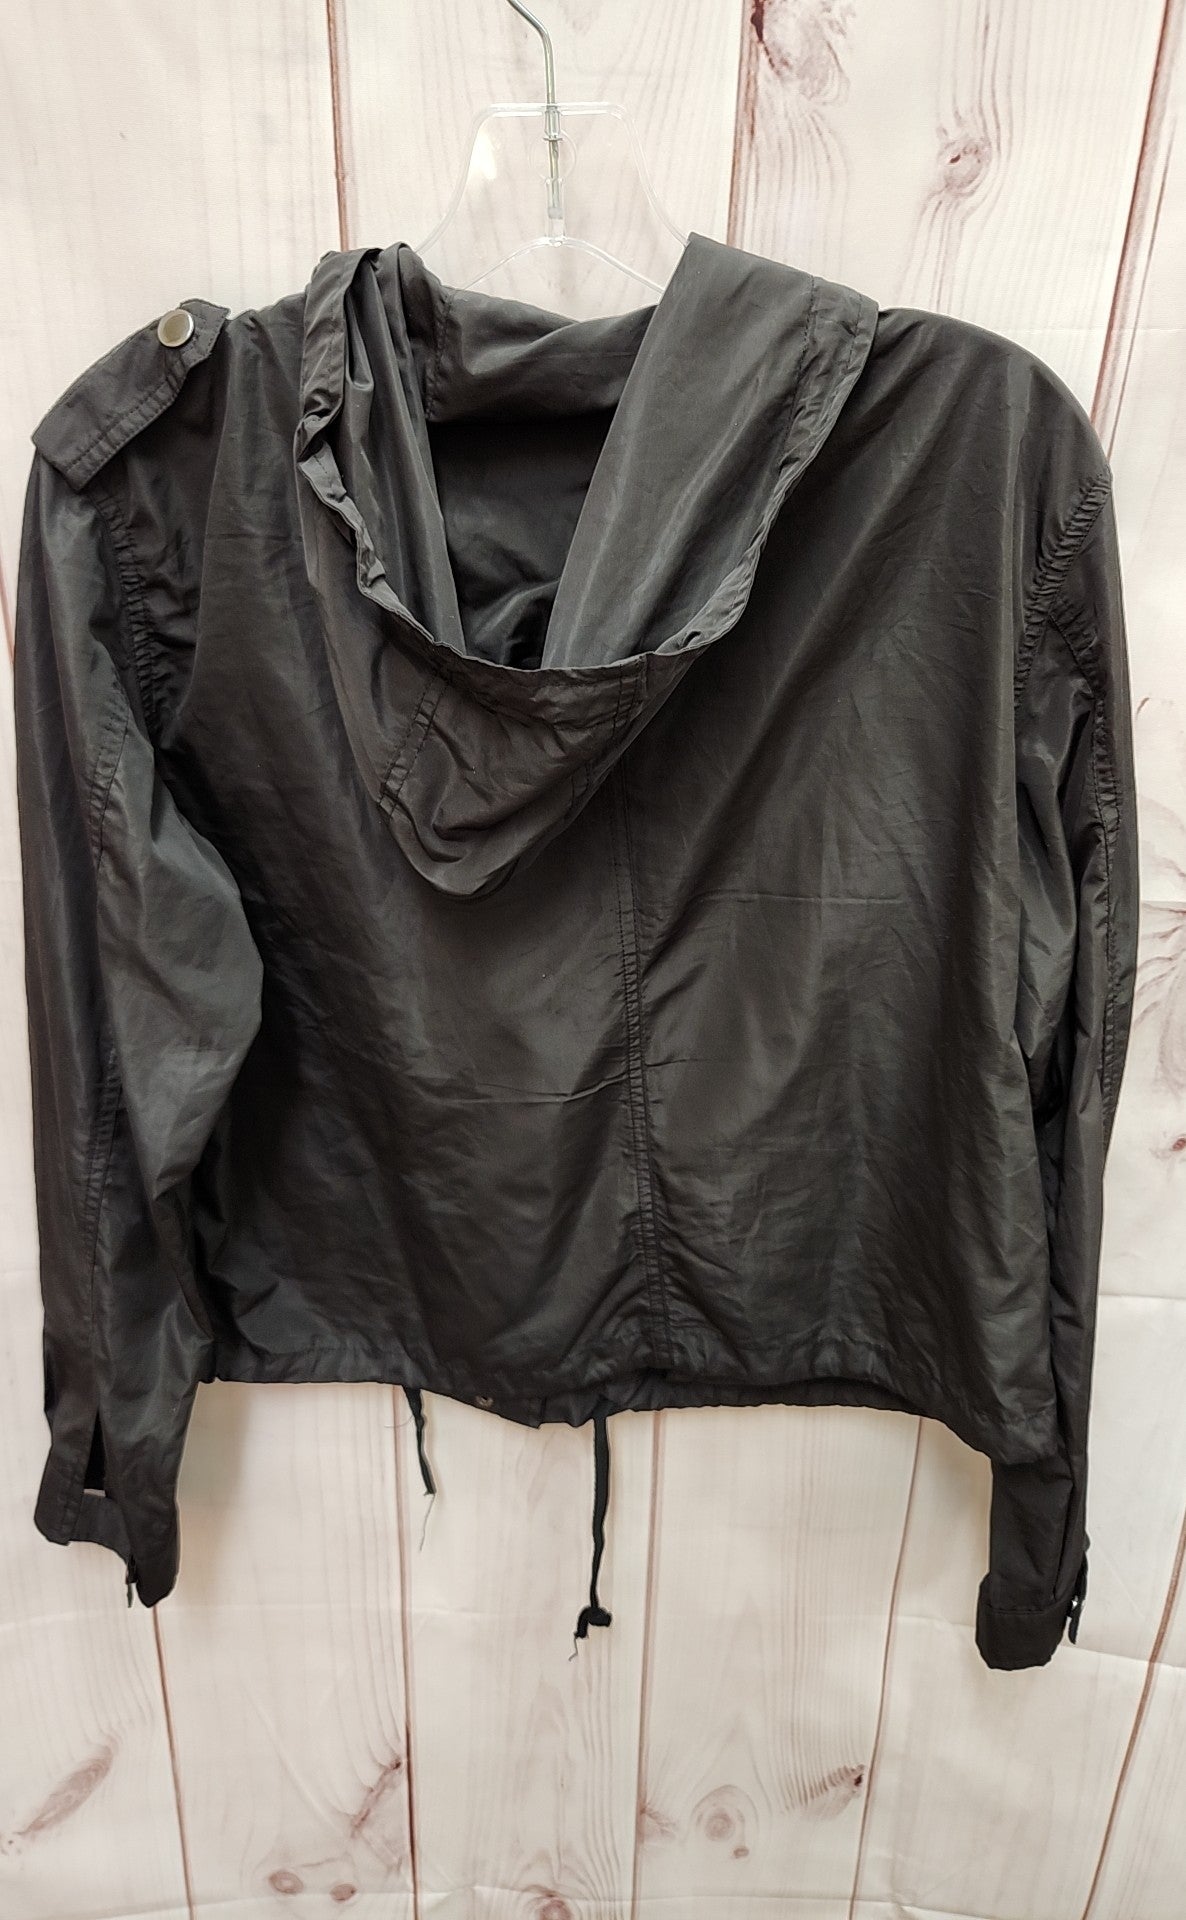 Brandy Melville Women's Size One Size Black Raincoat